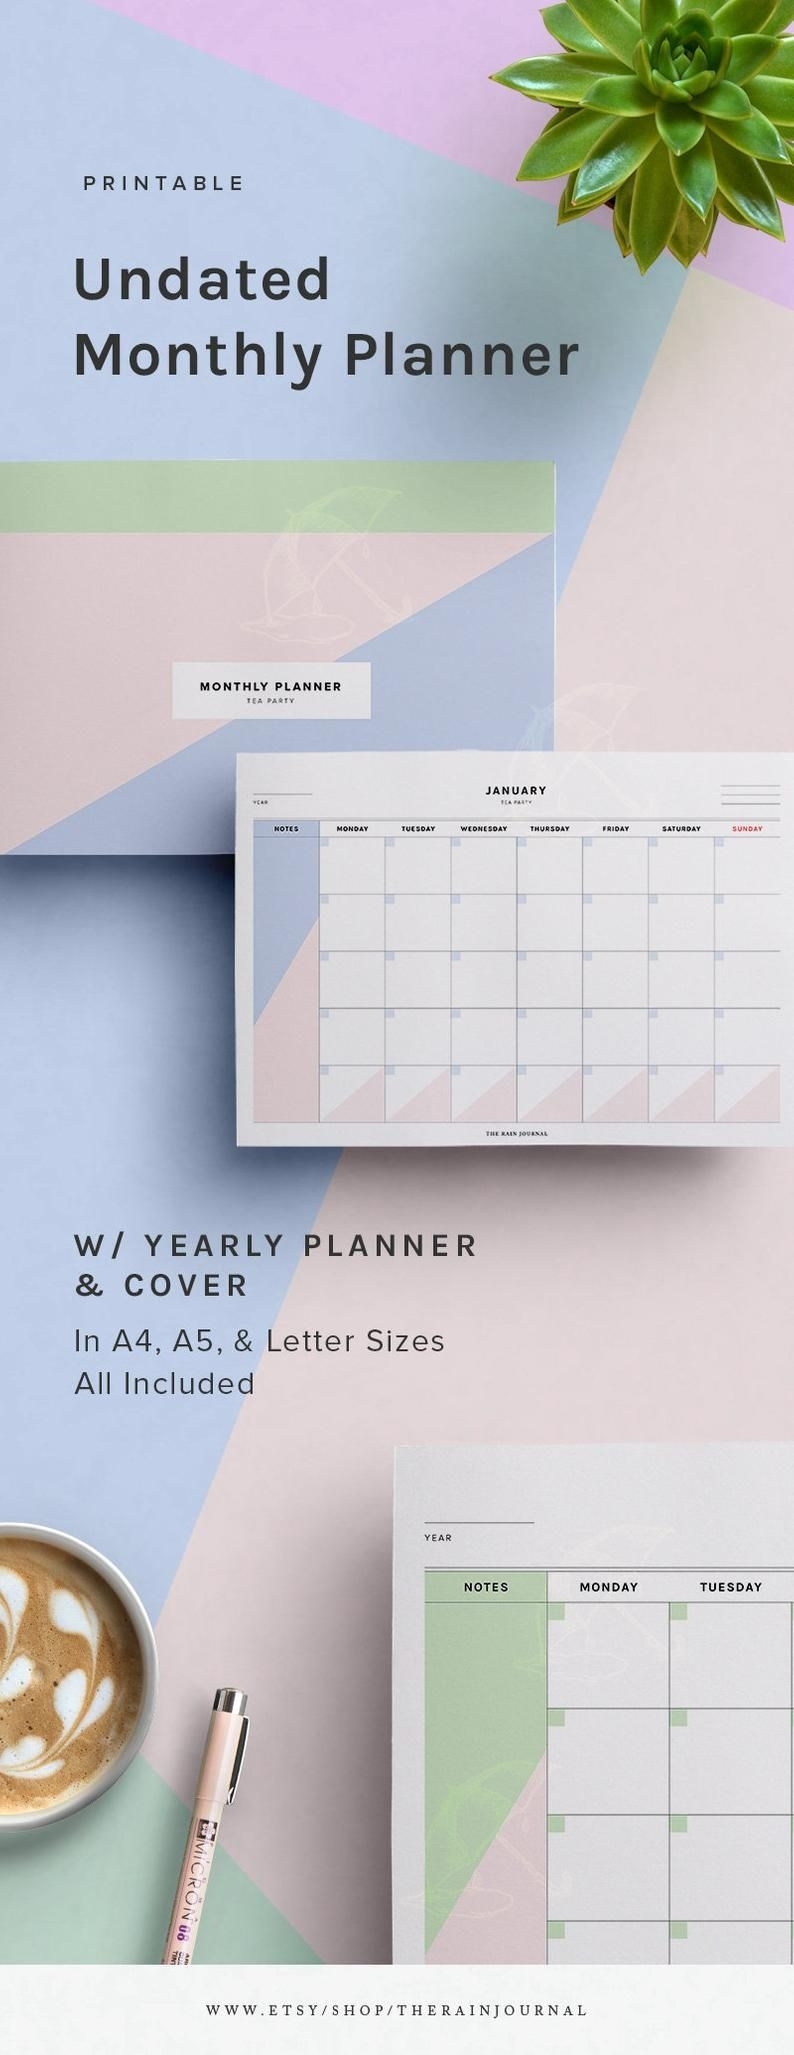 Undated Calendar, Undated Monthly Planner, Printable